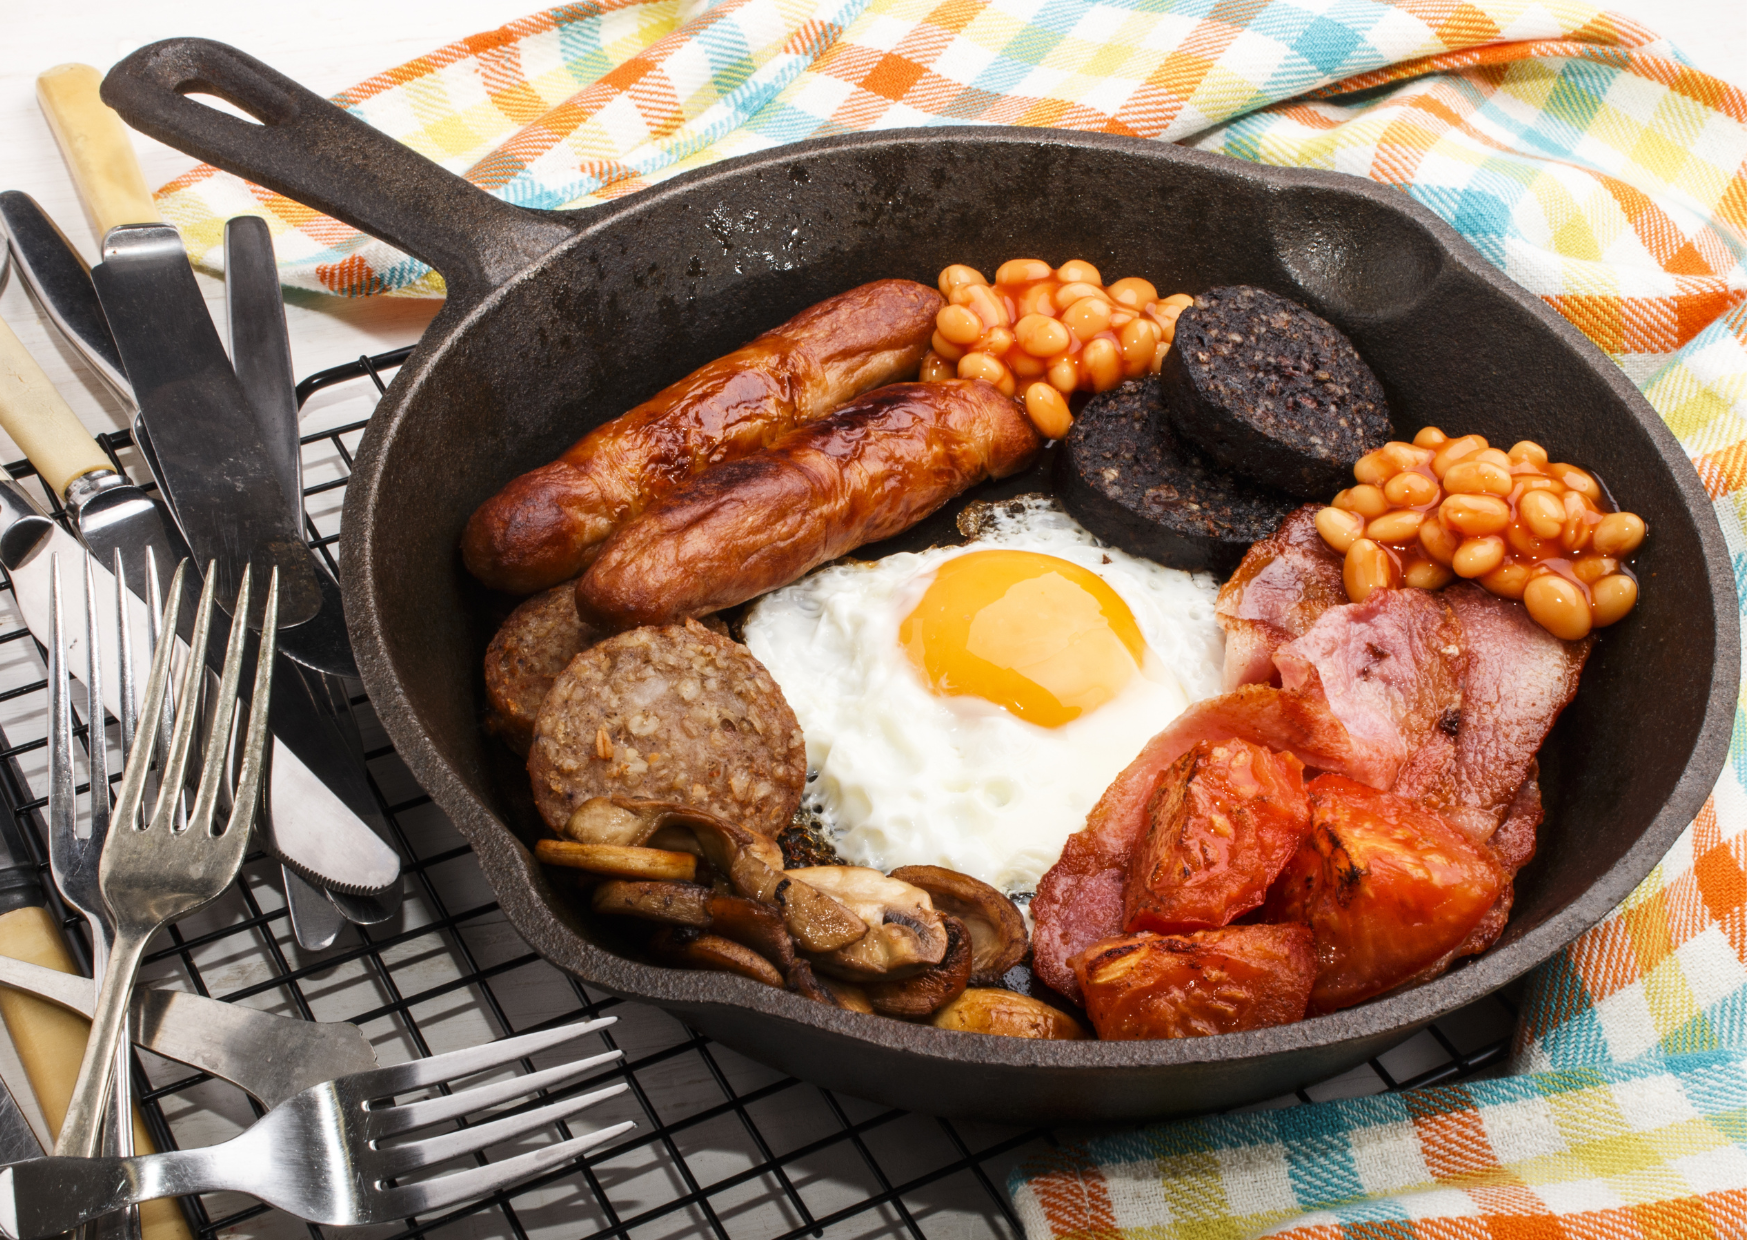 Traditional Full Irish Breakfast - What to Eat for Breakfast in Ireland 